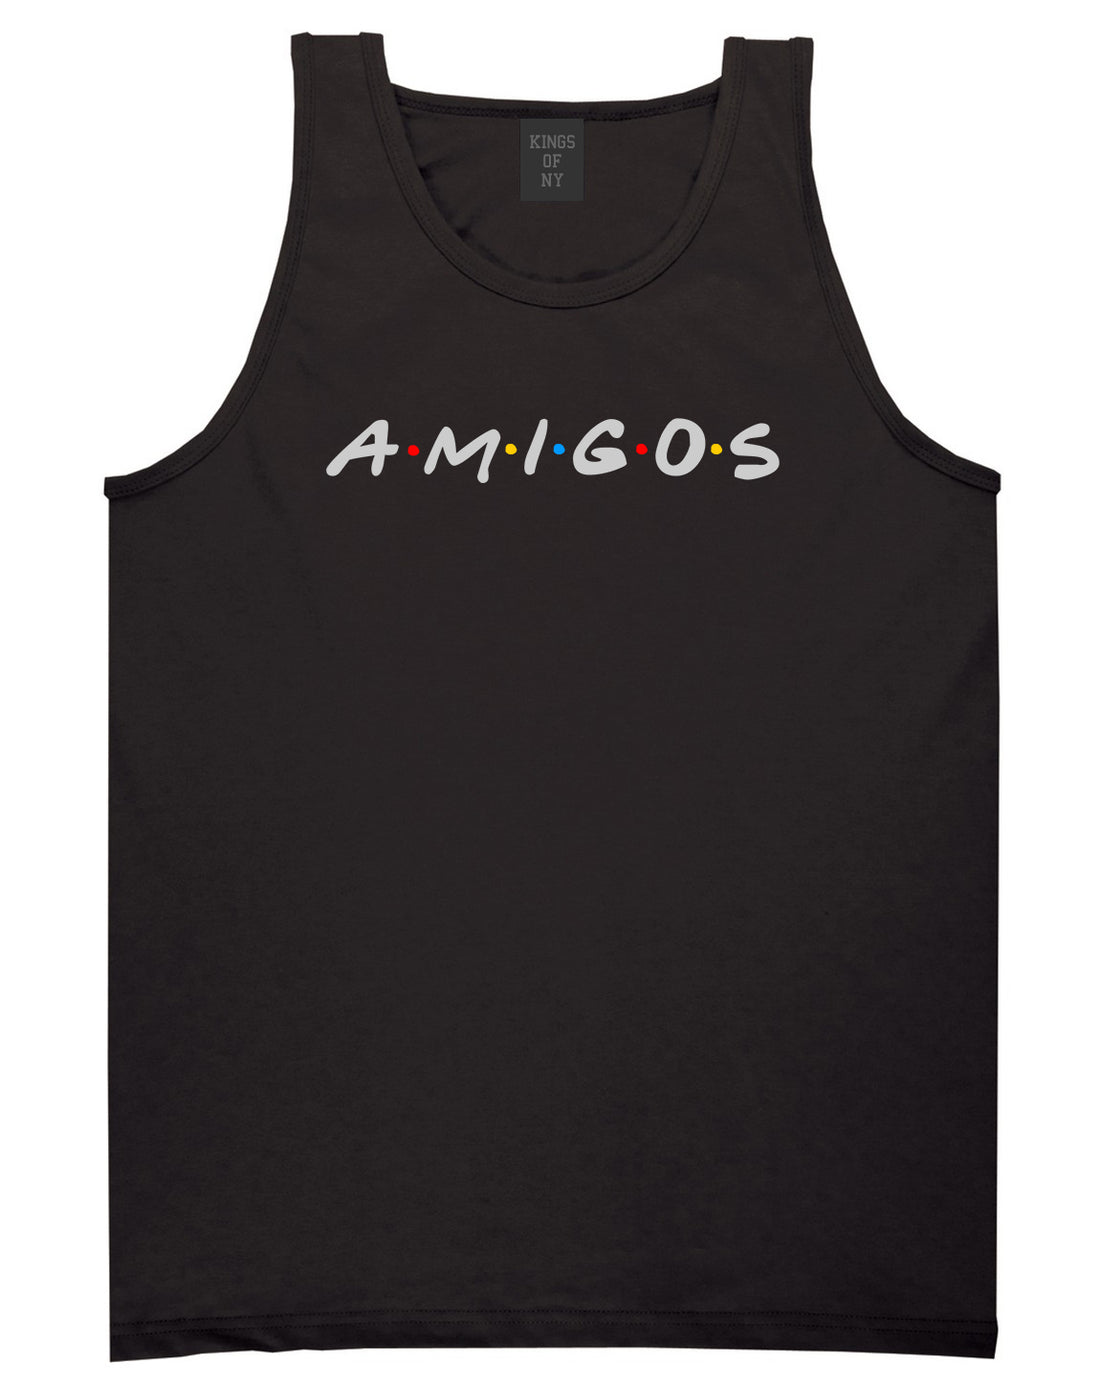 Amigos Funny Friends Spanish Mens Tank Top T-Shirt Black